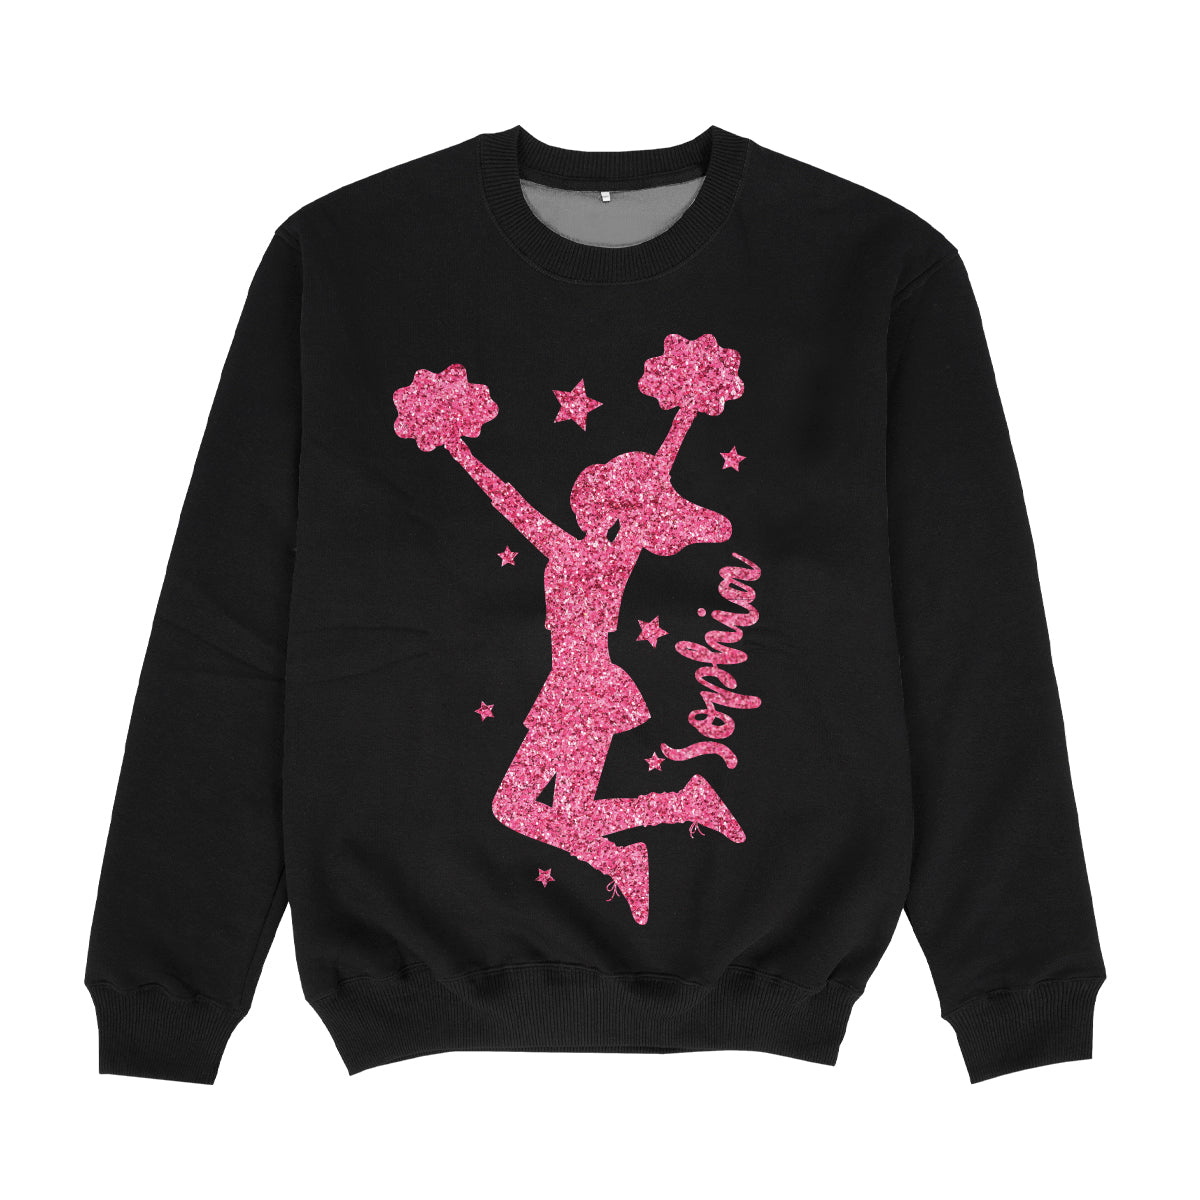 Cheerleader Glitter Personalized Name Black and Pink Crewneck Sweatshirt